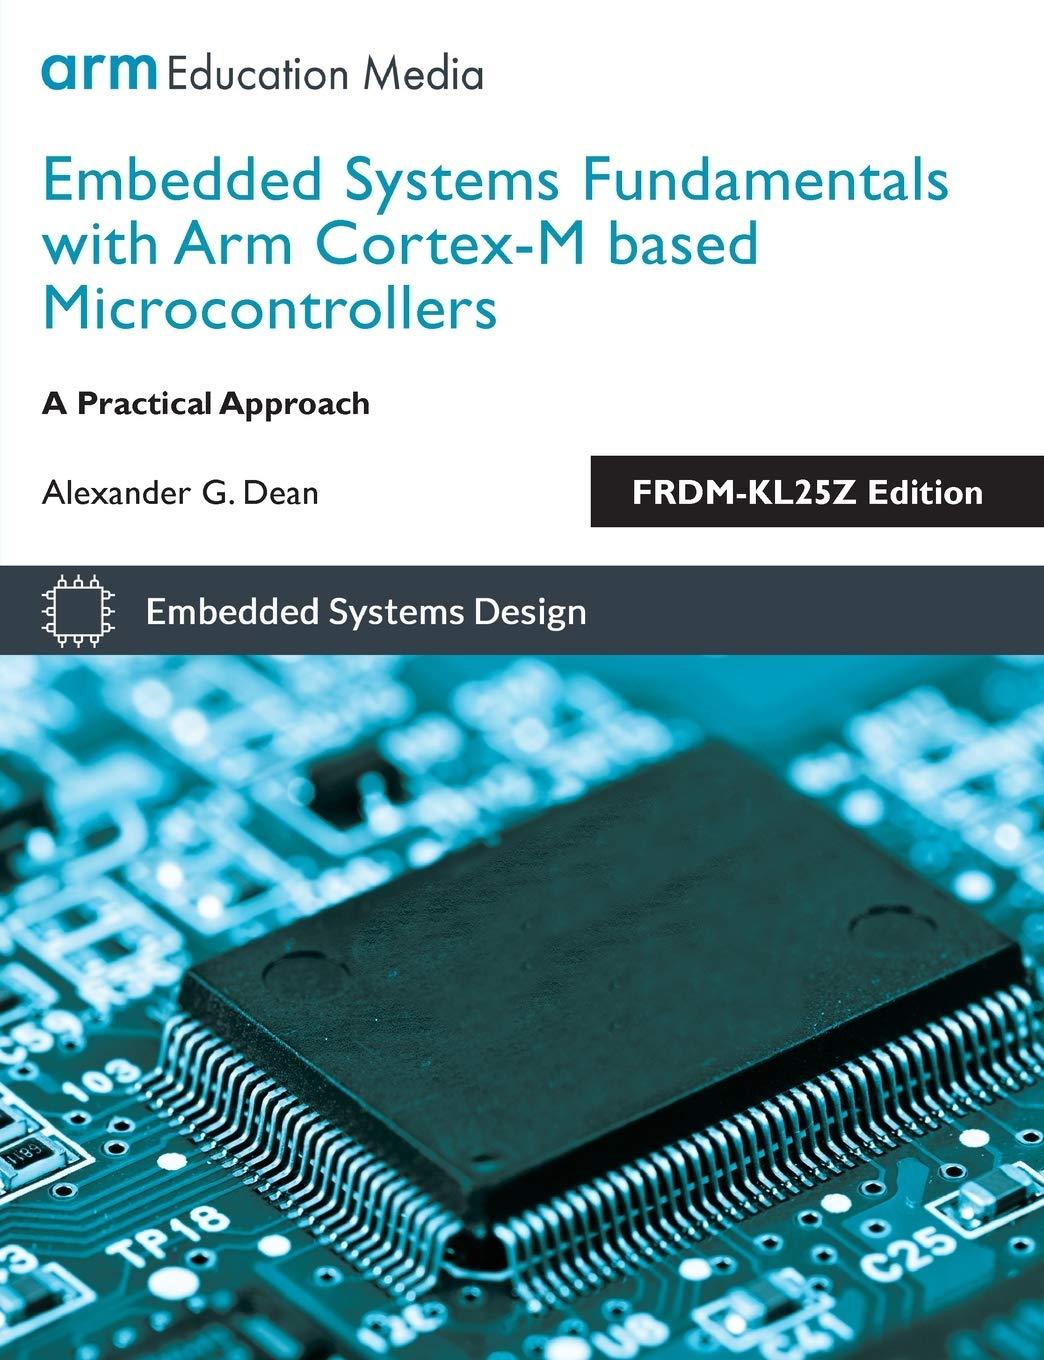 embedded systems fundamentals with arm cortex m based microcontrollers frdm kl25z edition alexander g dean